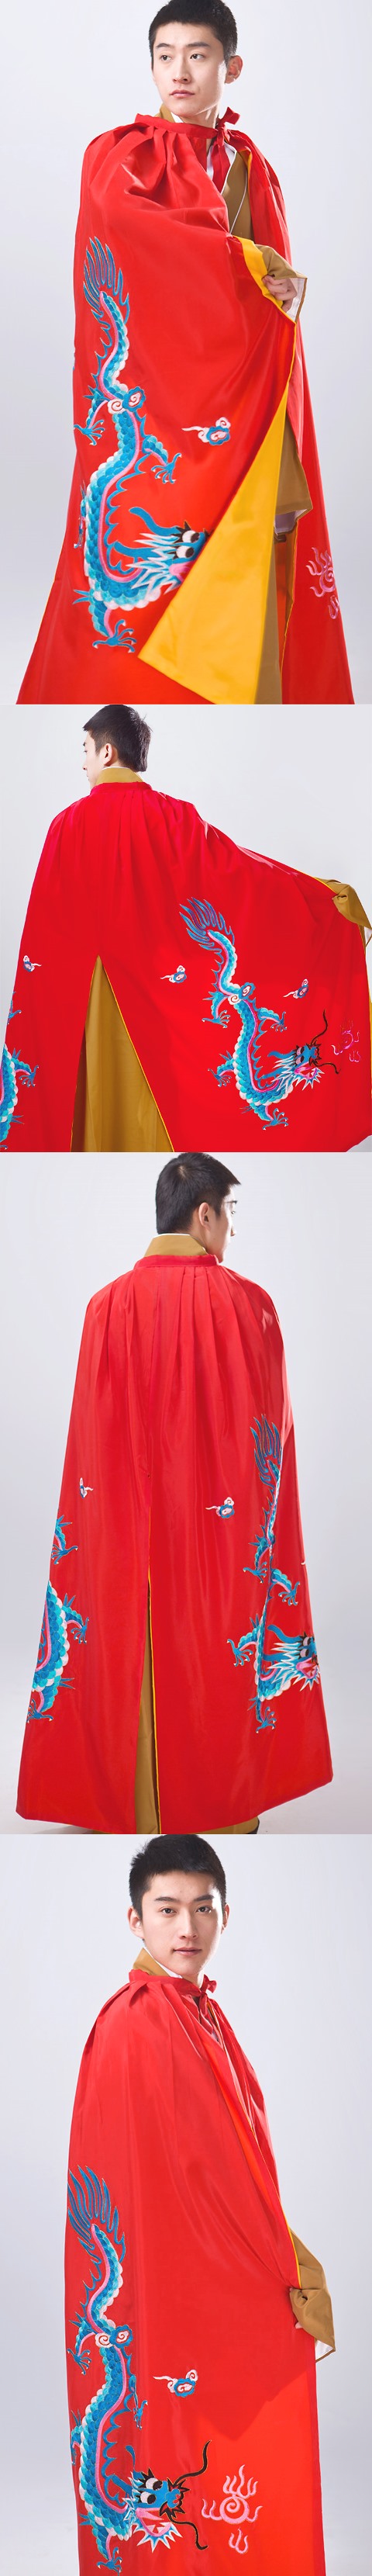 Men's Hanfu Dragon Embroidery Cloak - Red (RM)